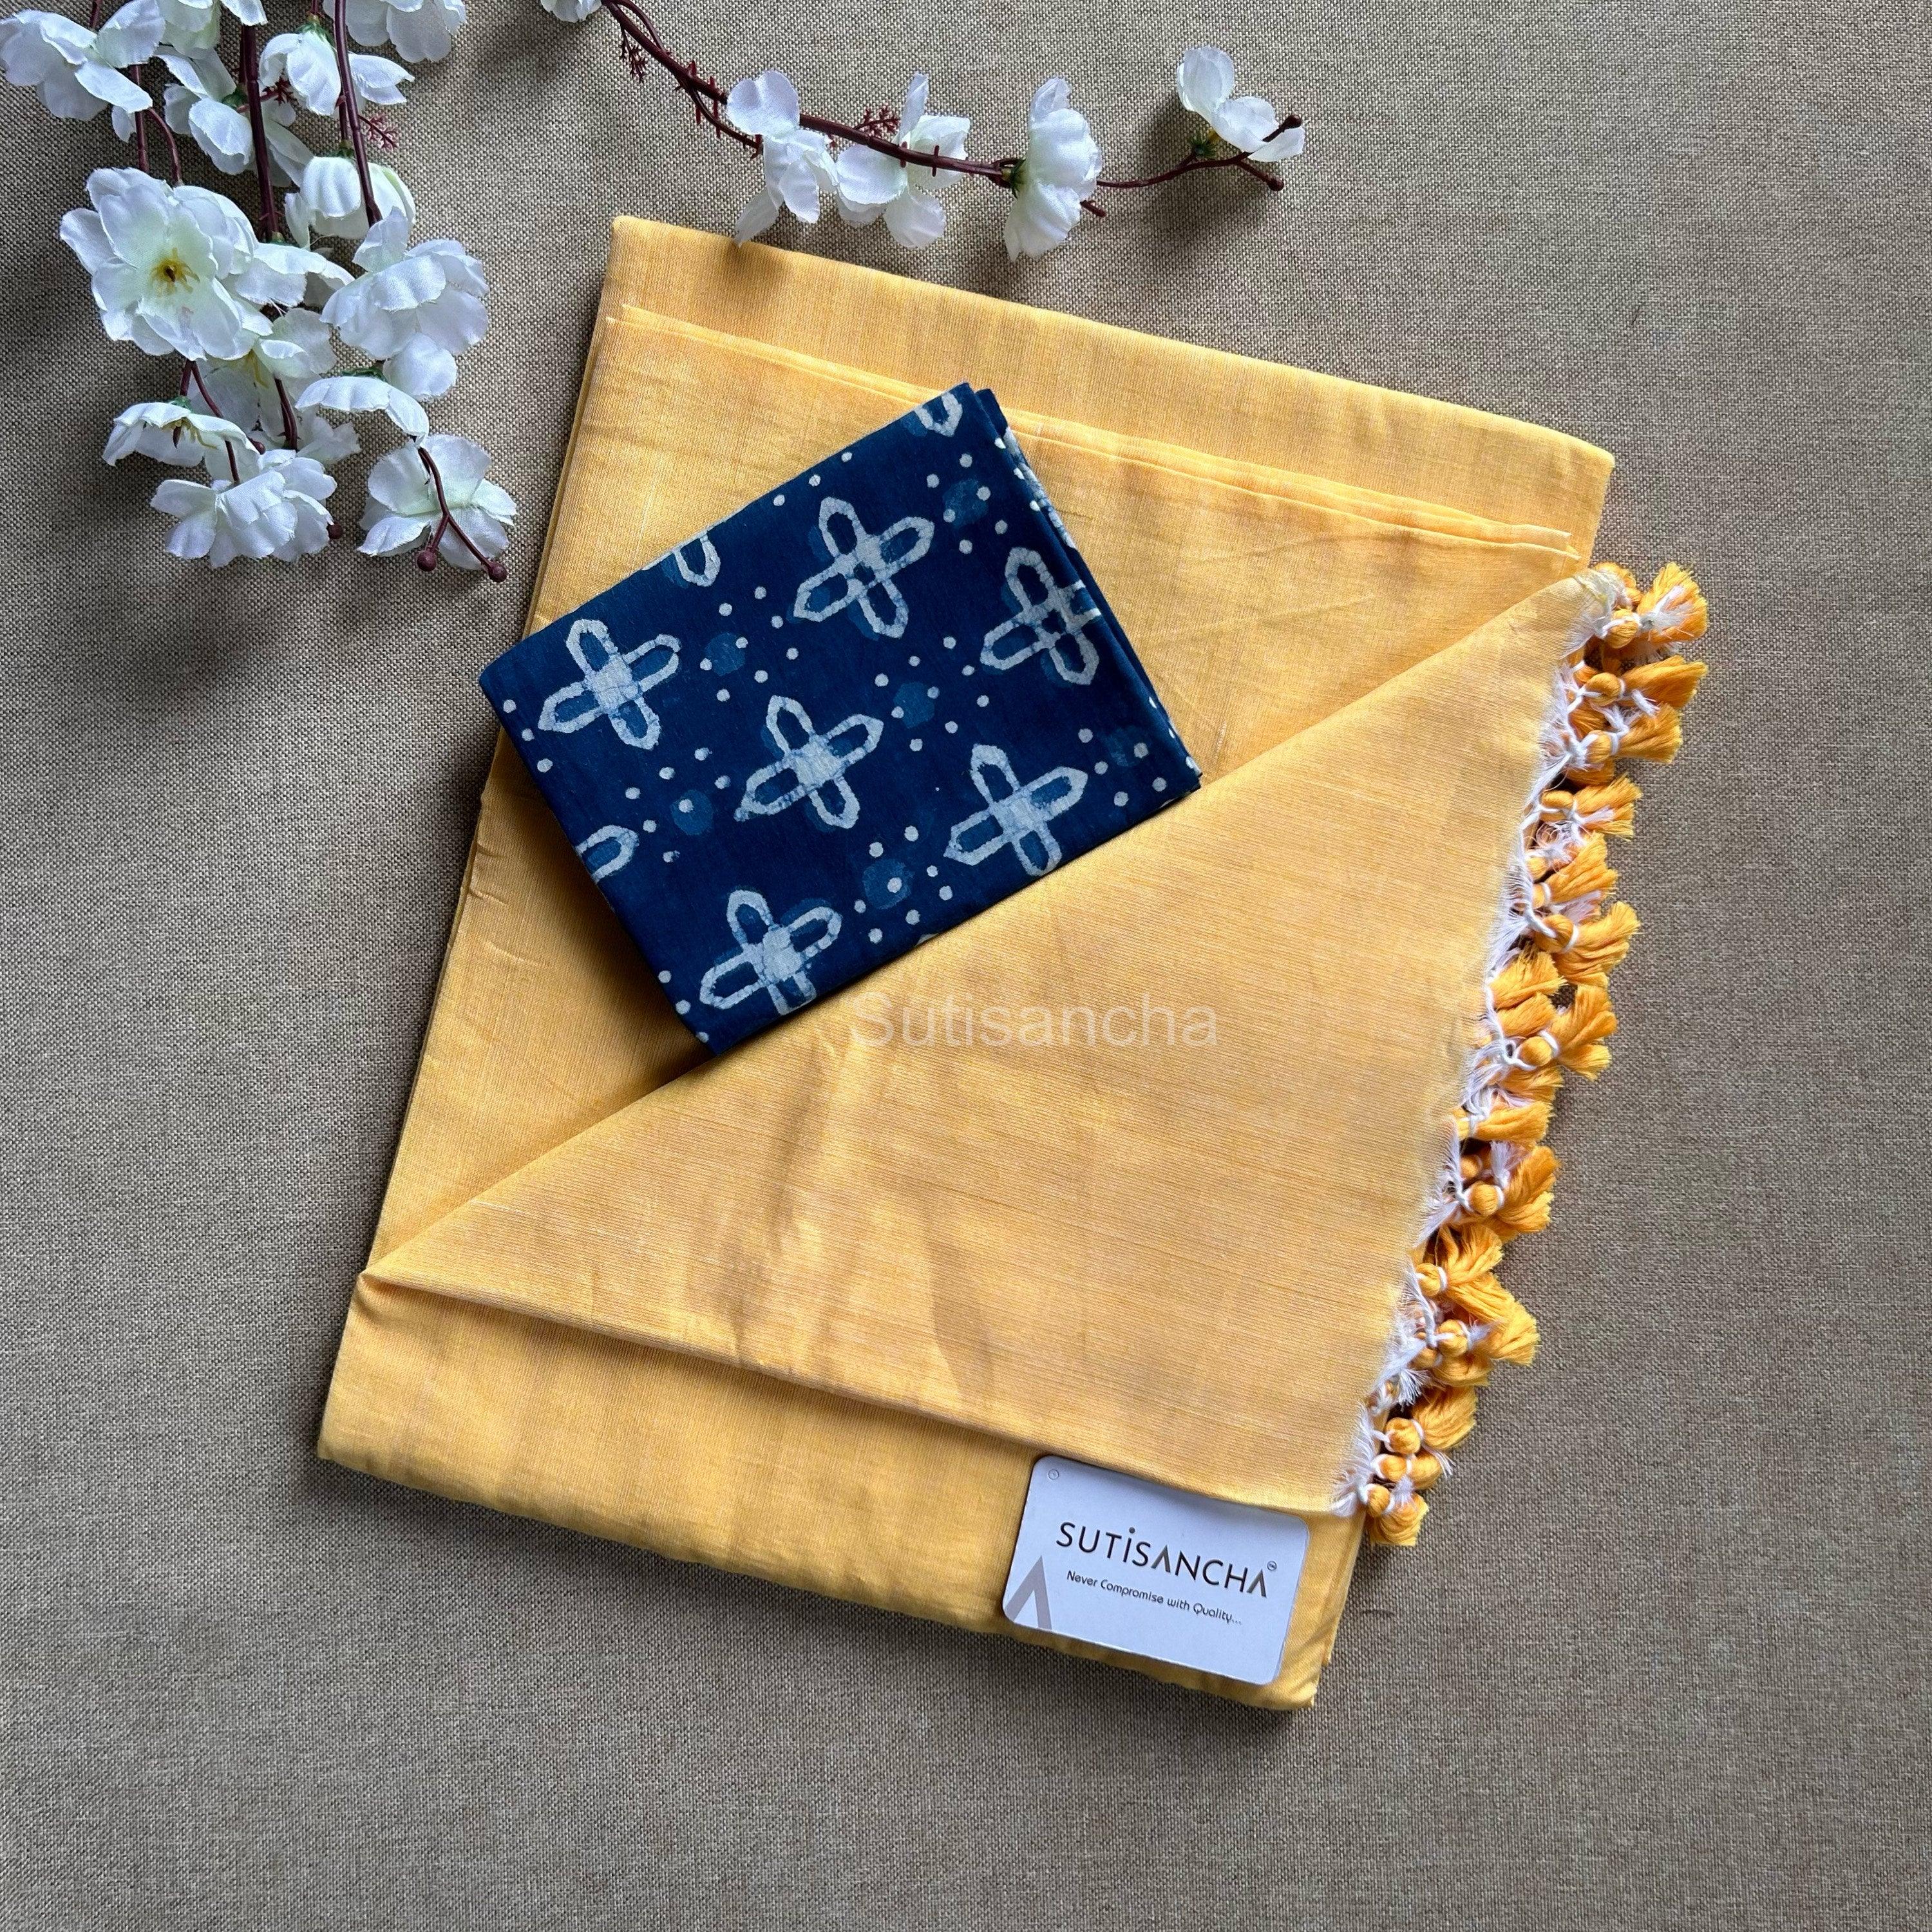 Sutisancha Yellow Colour Handloom Cotton Saree - Suti Sancha